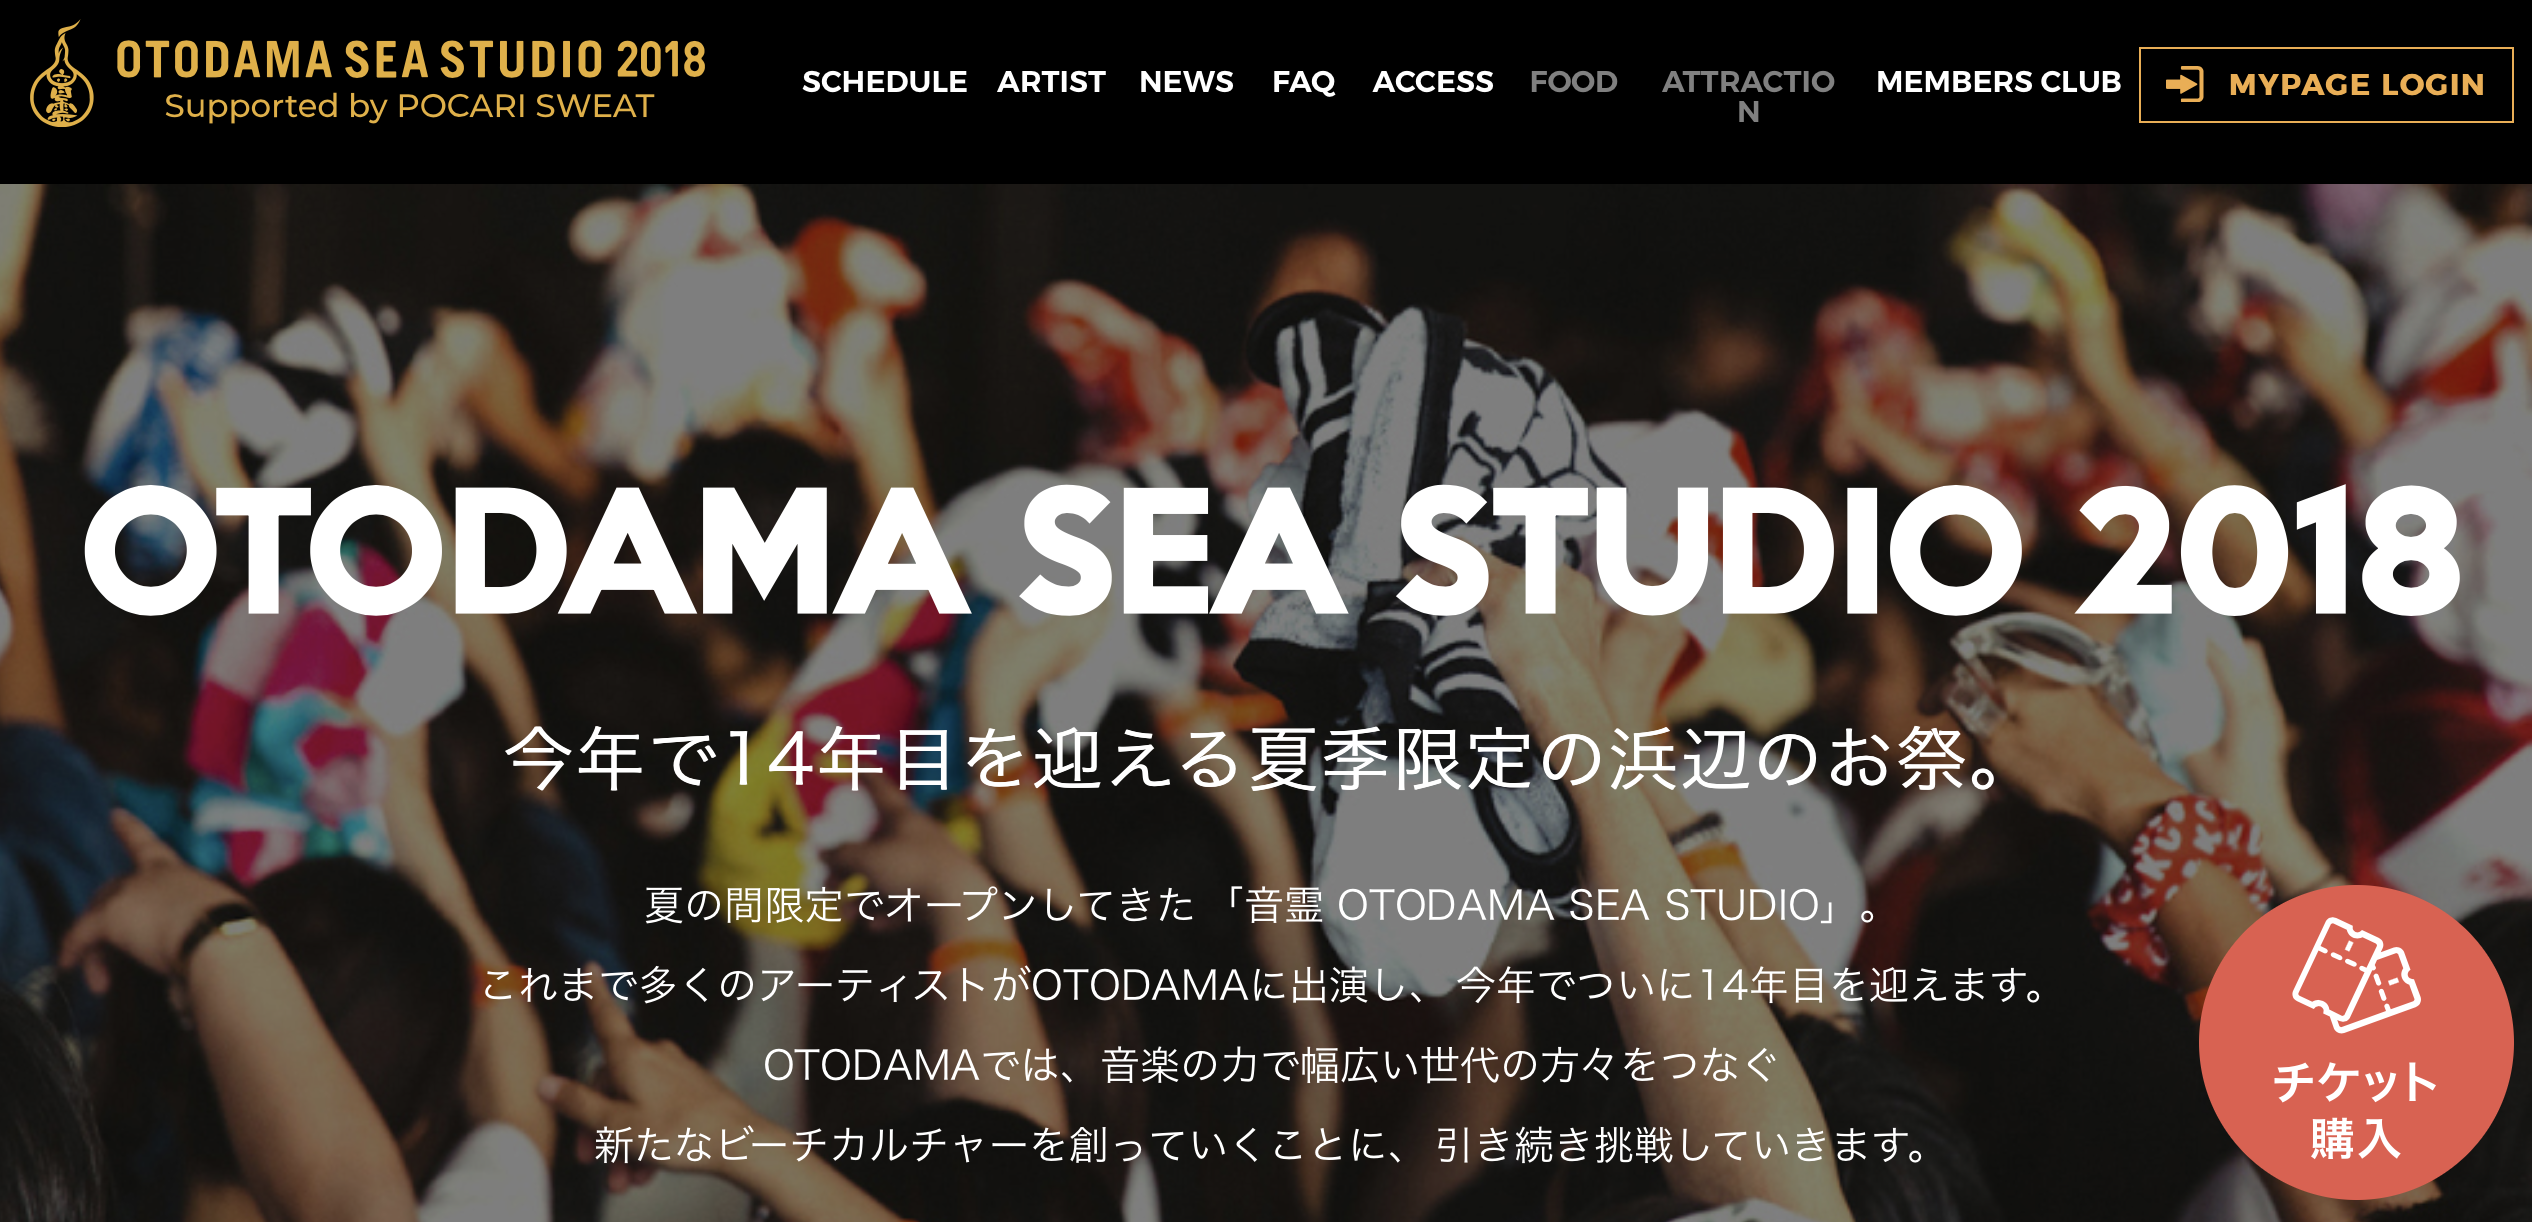 OTODAMA SEA STUDIO 2018 supported by POCARI SWEAT～PINK SUMMER 2018～